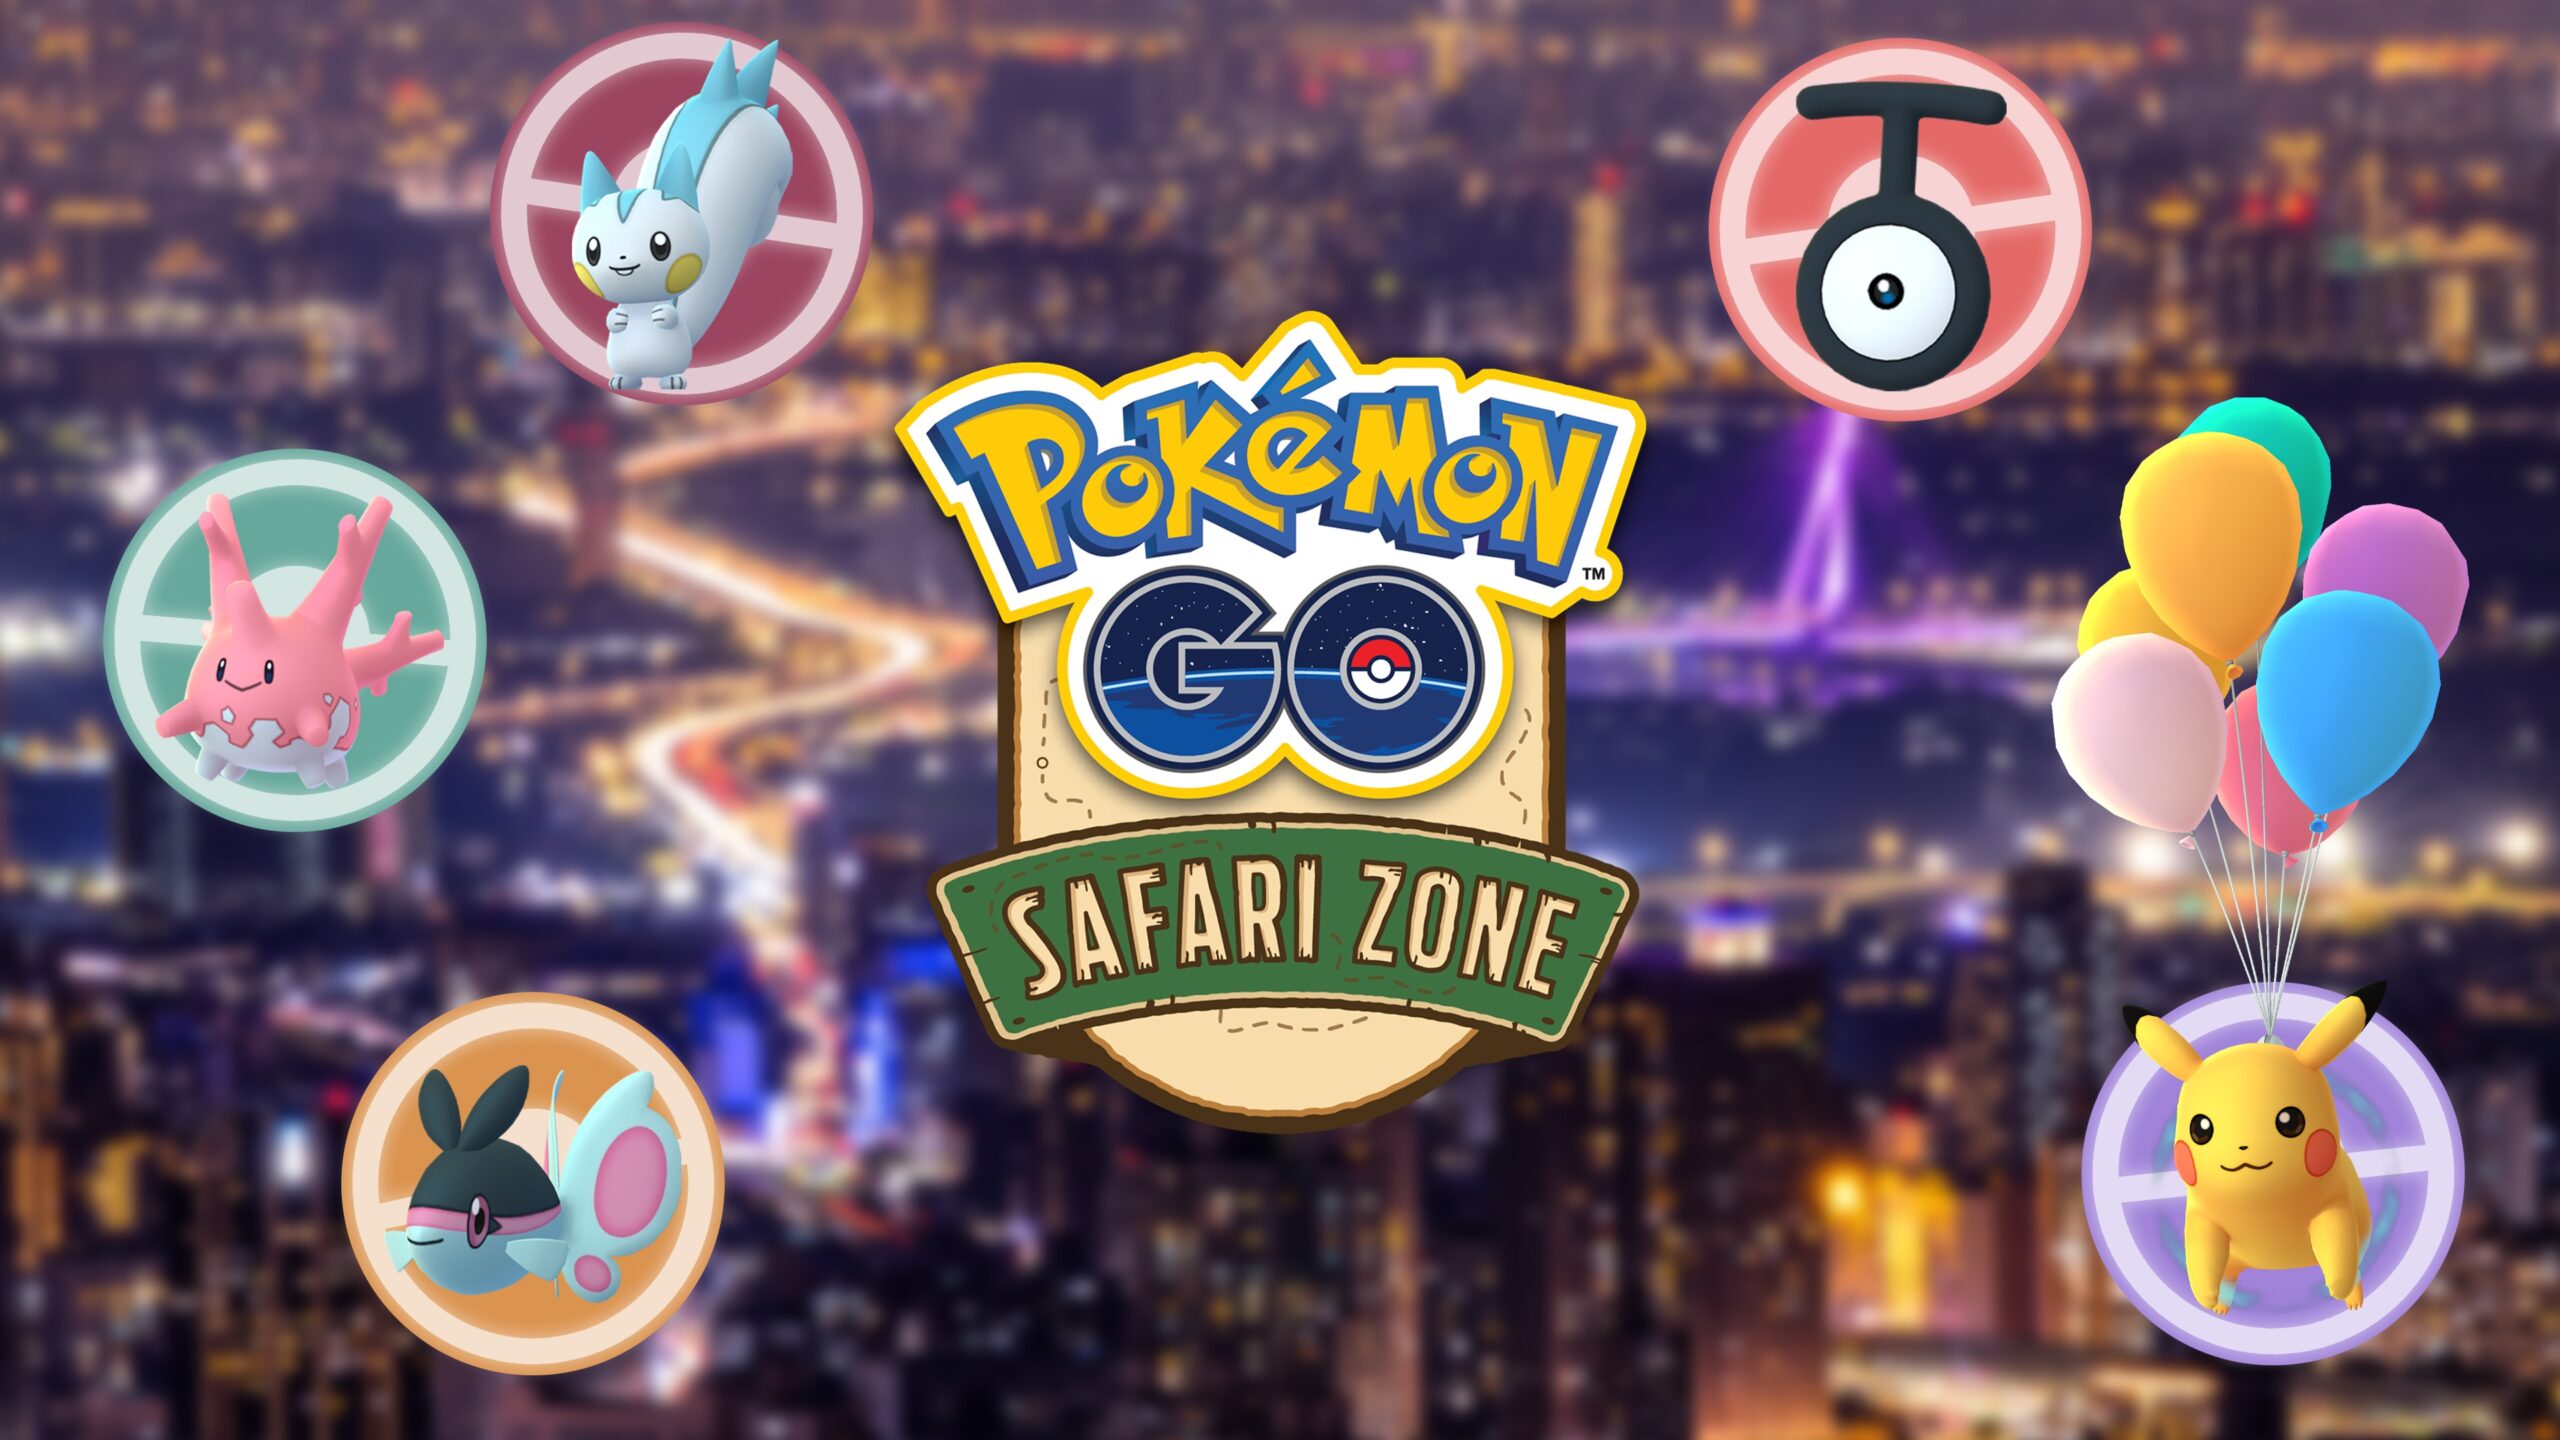 Pokemon GO Safari Zone Taipei event